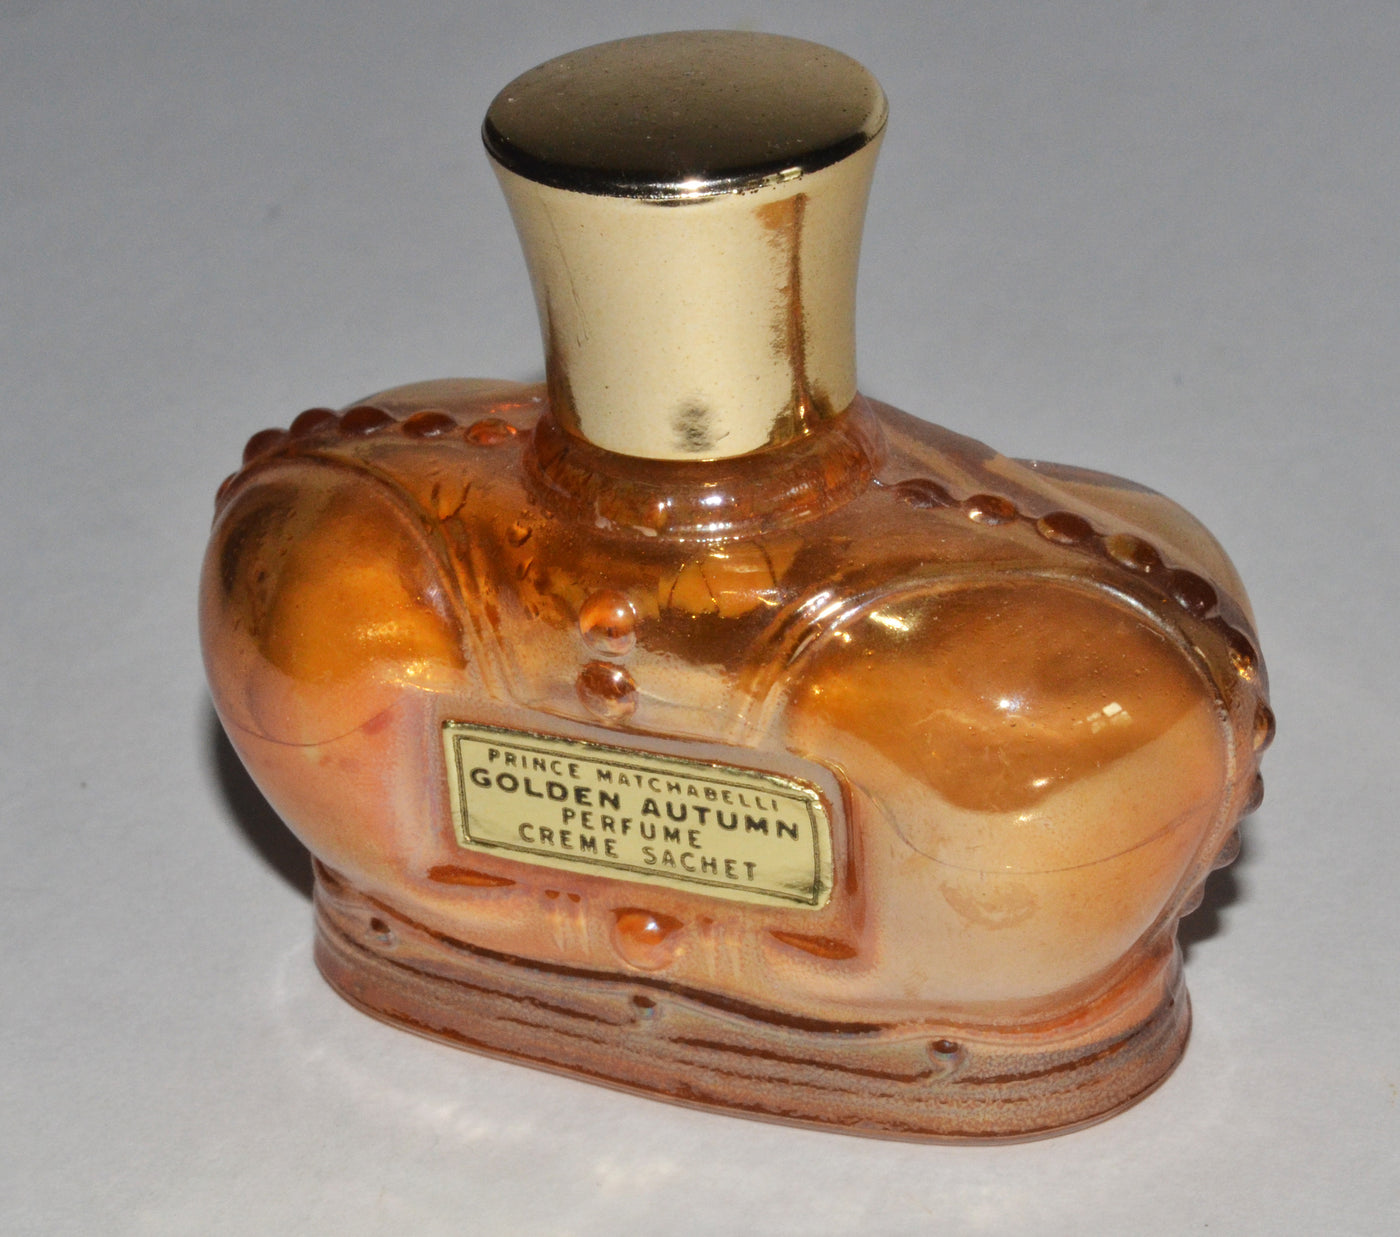 Vintage Golden Autumn Perfume Creme Sachet By Prince Matchabelli